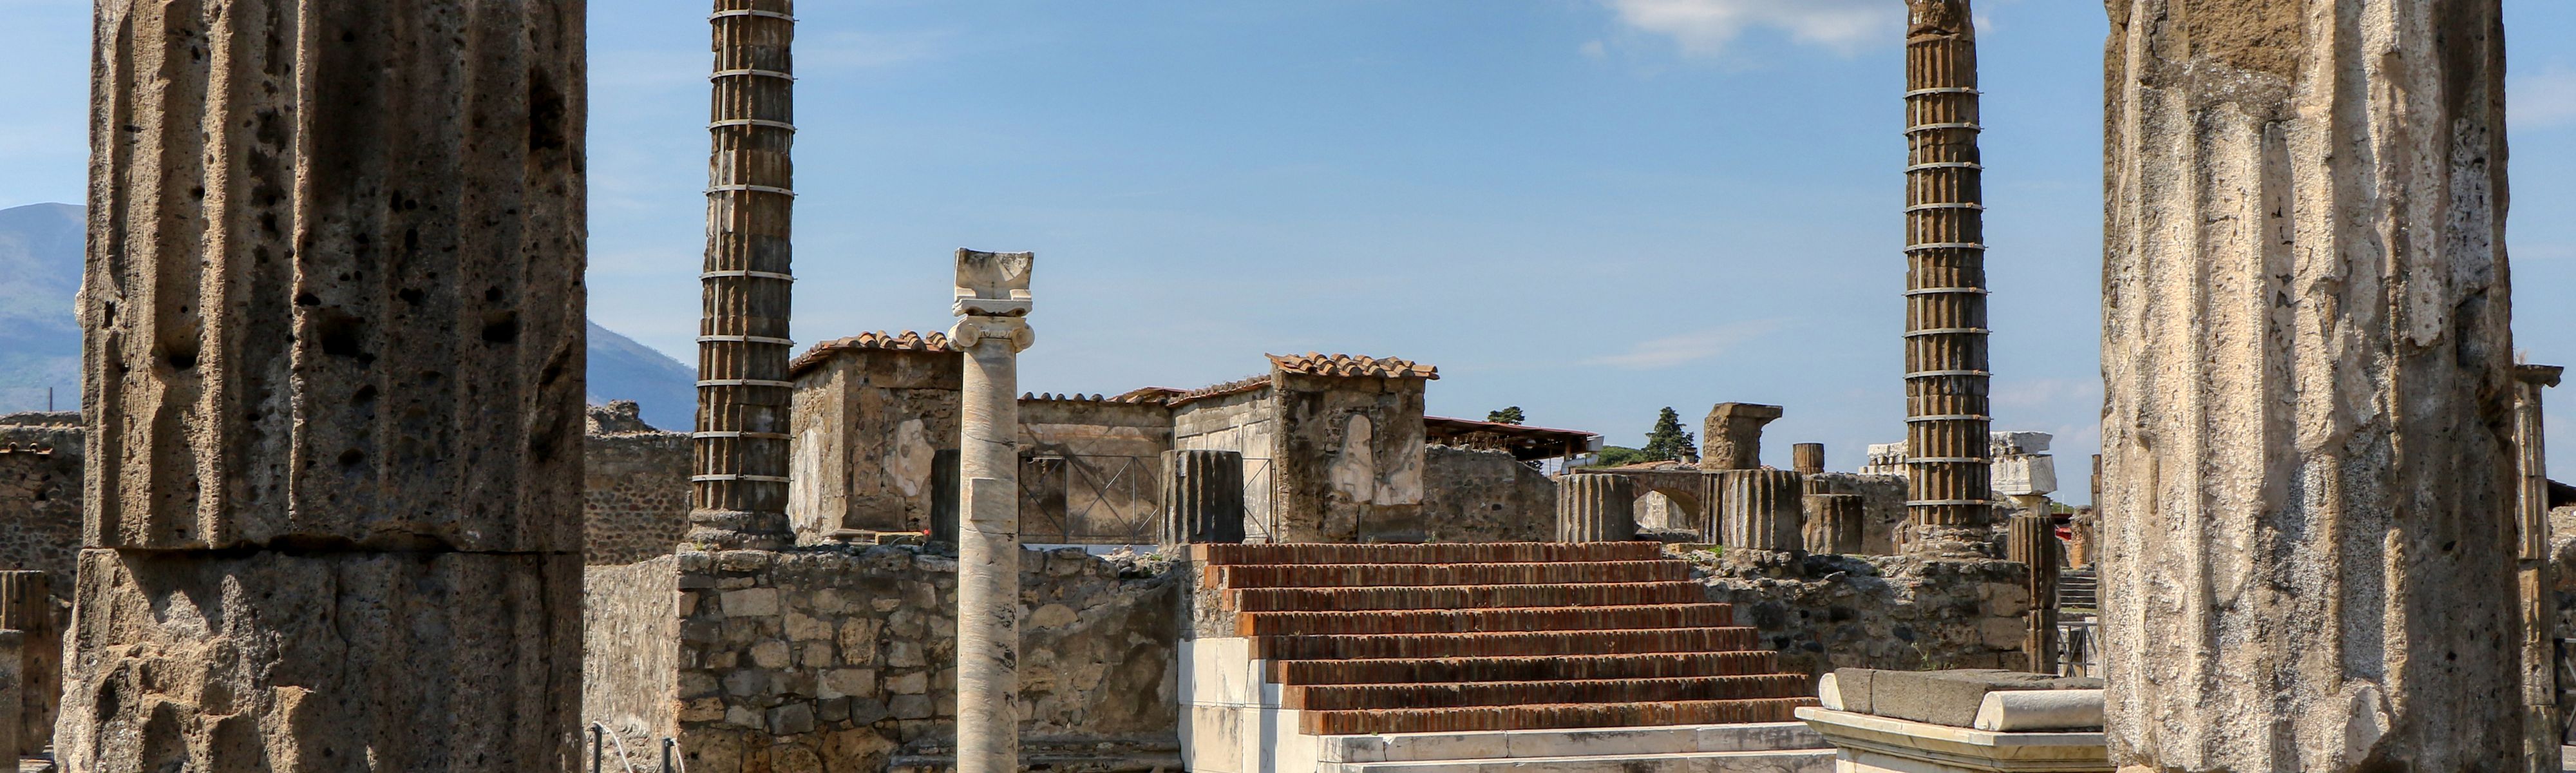 ancient ruins pillars in pompeii italy 